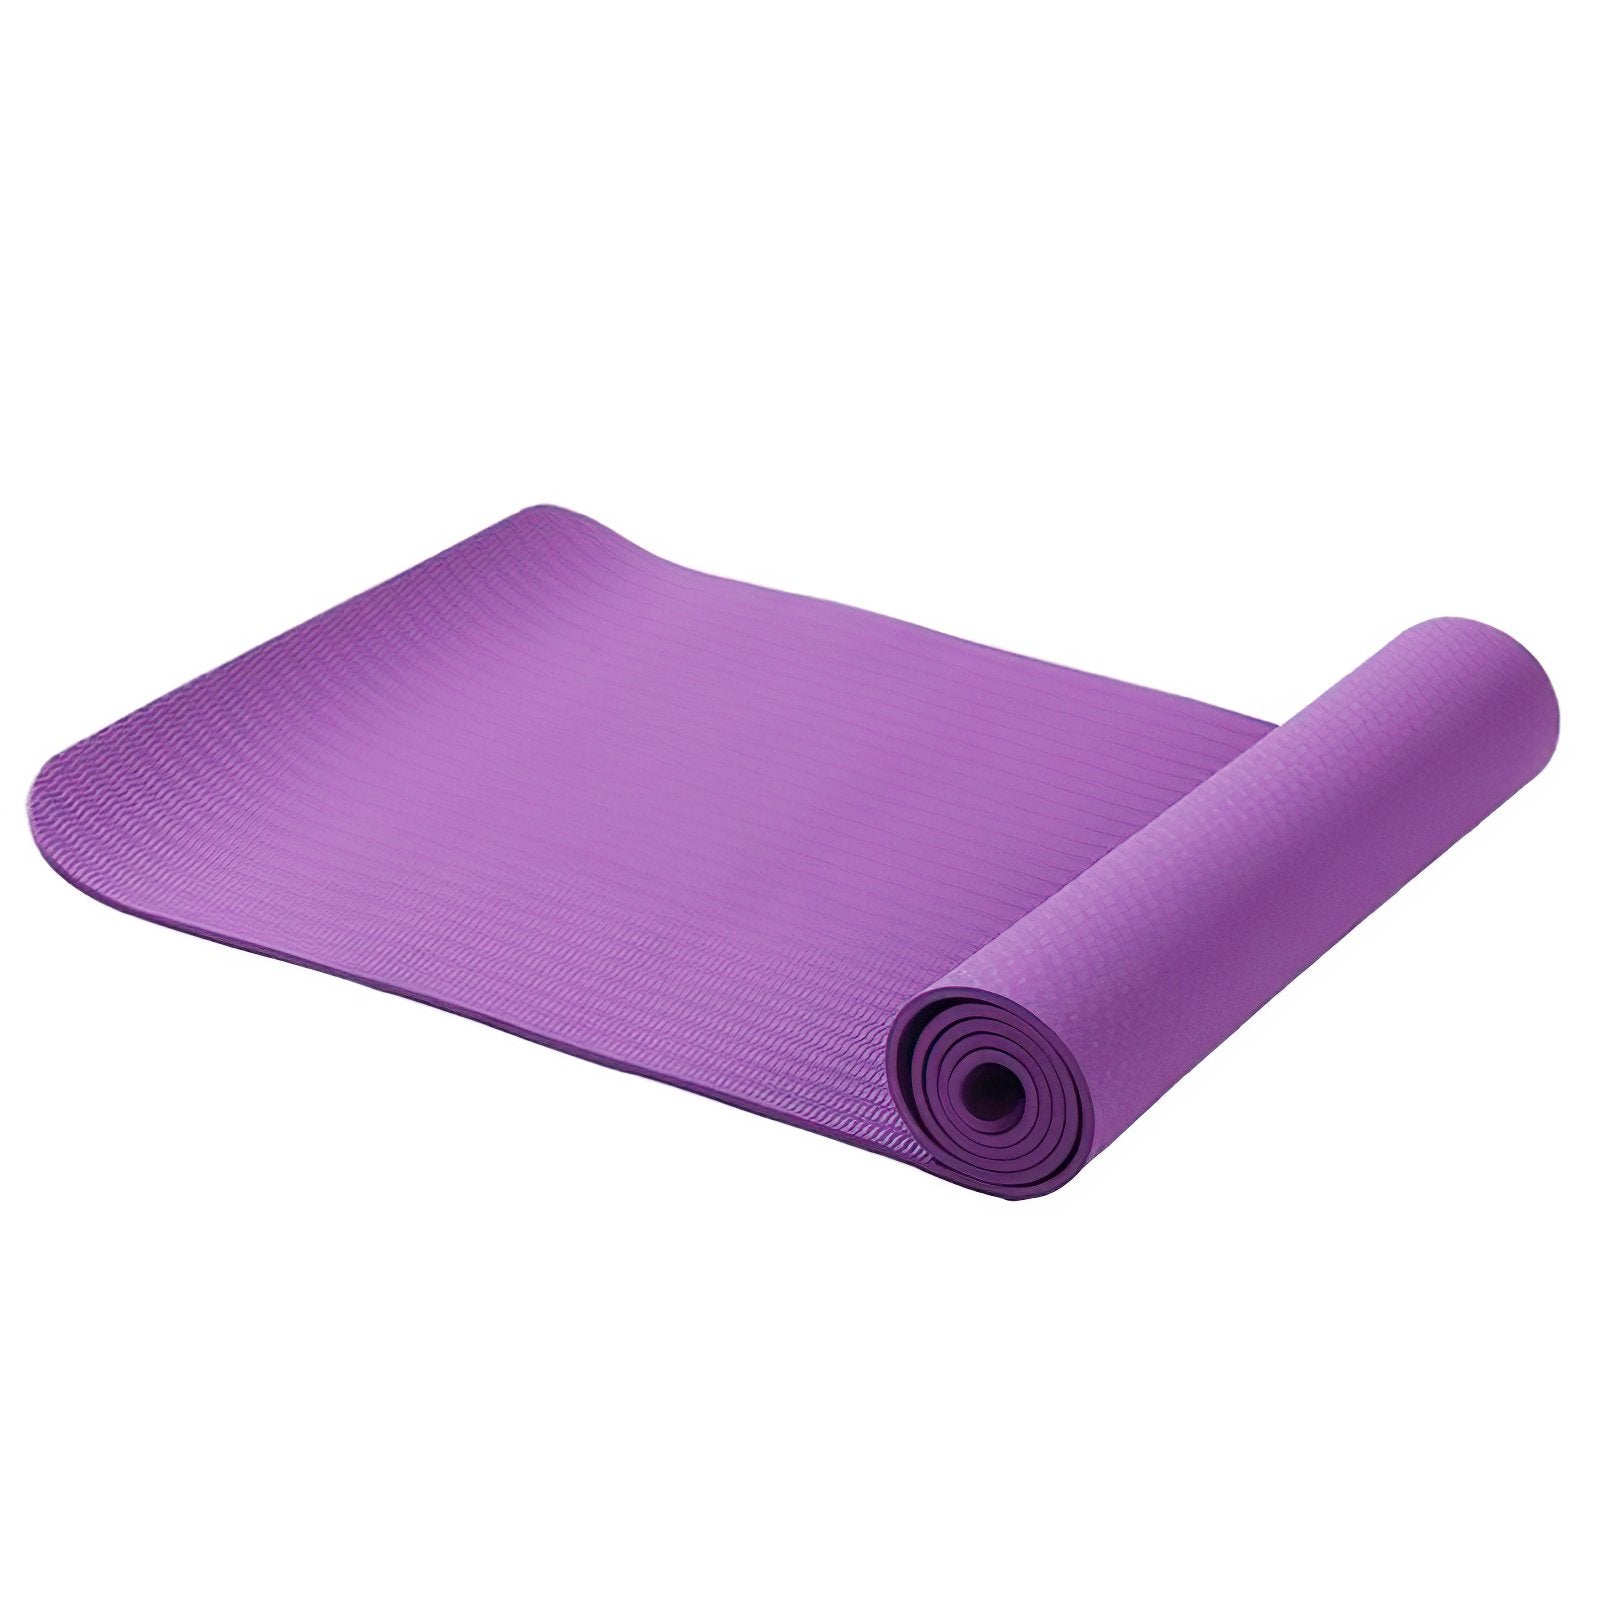 Yoga Pro Yogi Mat (73 x 24 x 1/4) - Purple 